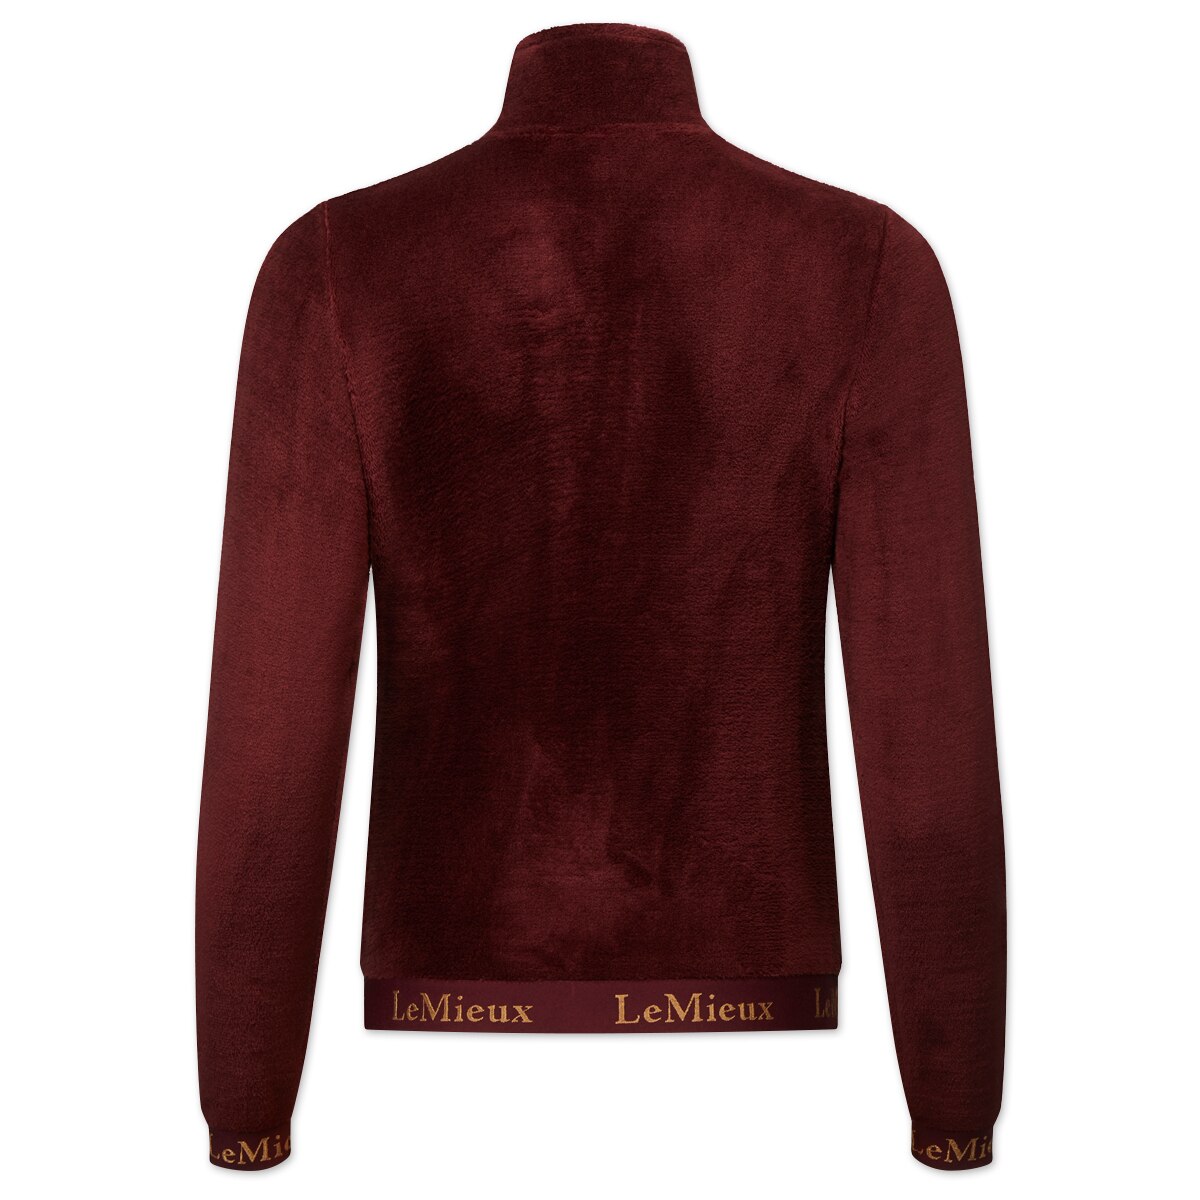 My Lemieux Lightweight Sweater Burgundy XL Brand New